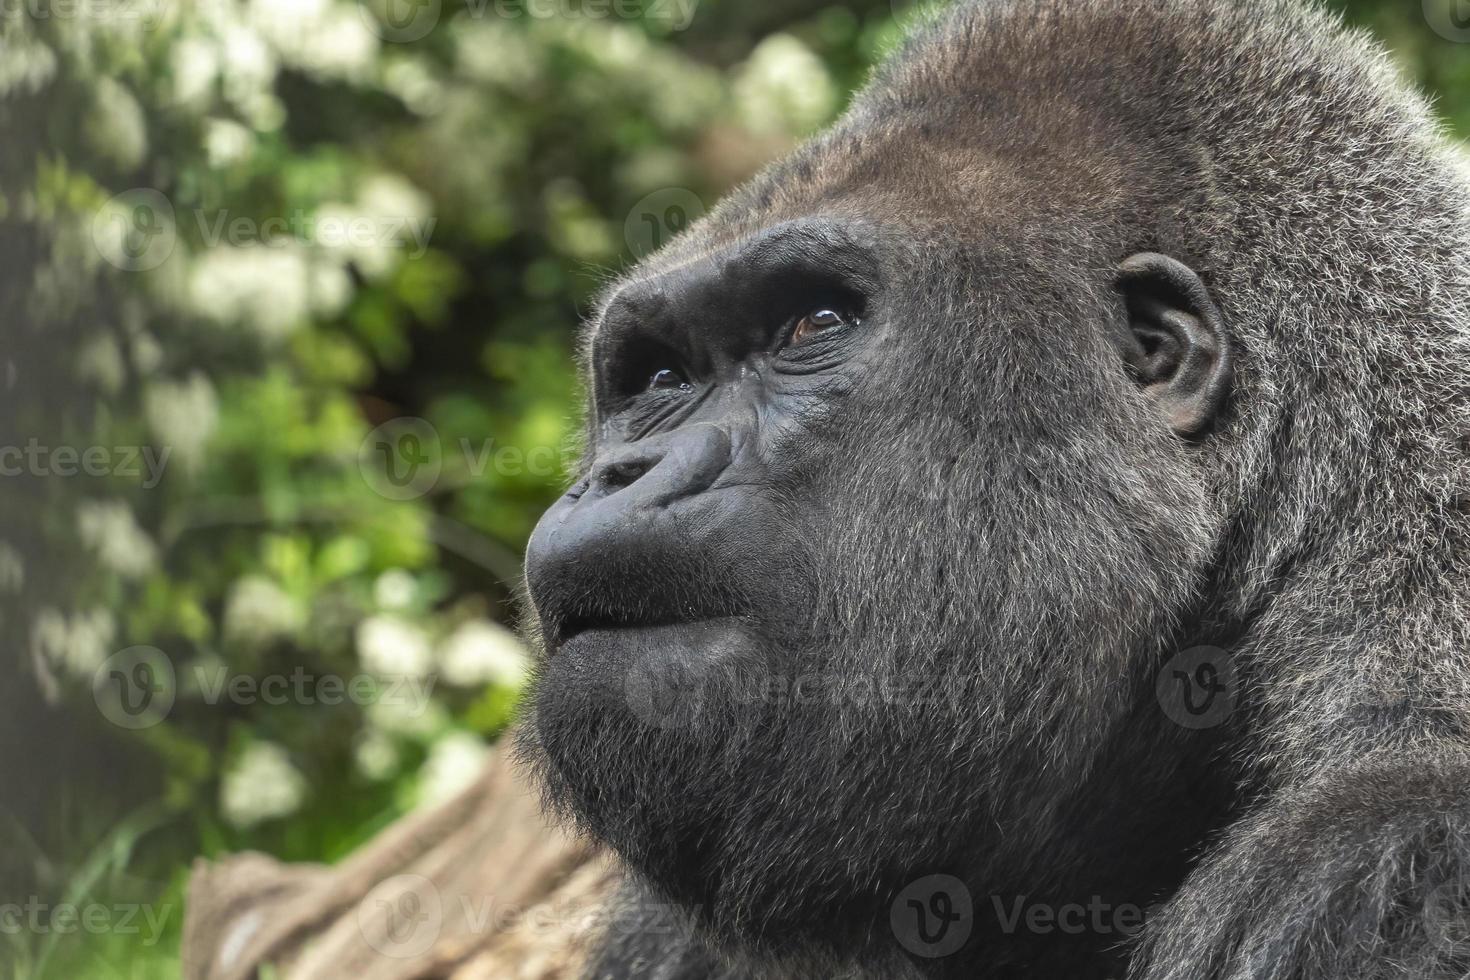 Silverback gorilla close up portrait doubtful photo